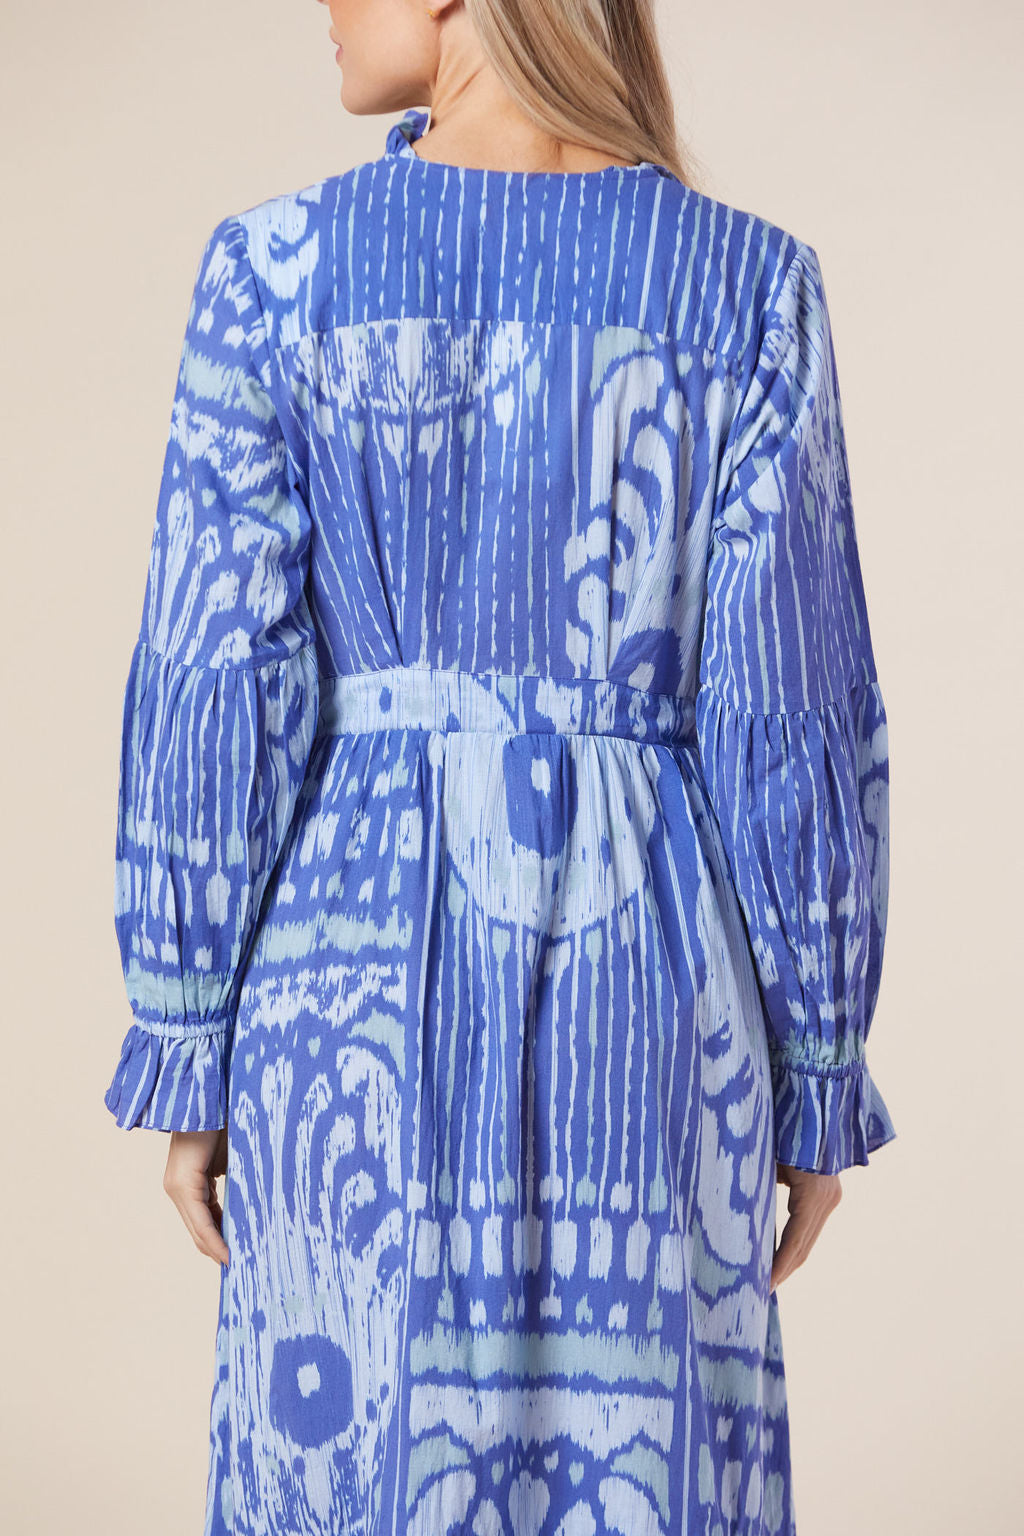 Britt Dress in Blue Moroccan Ikat